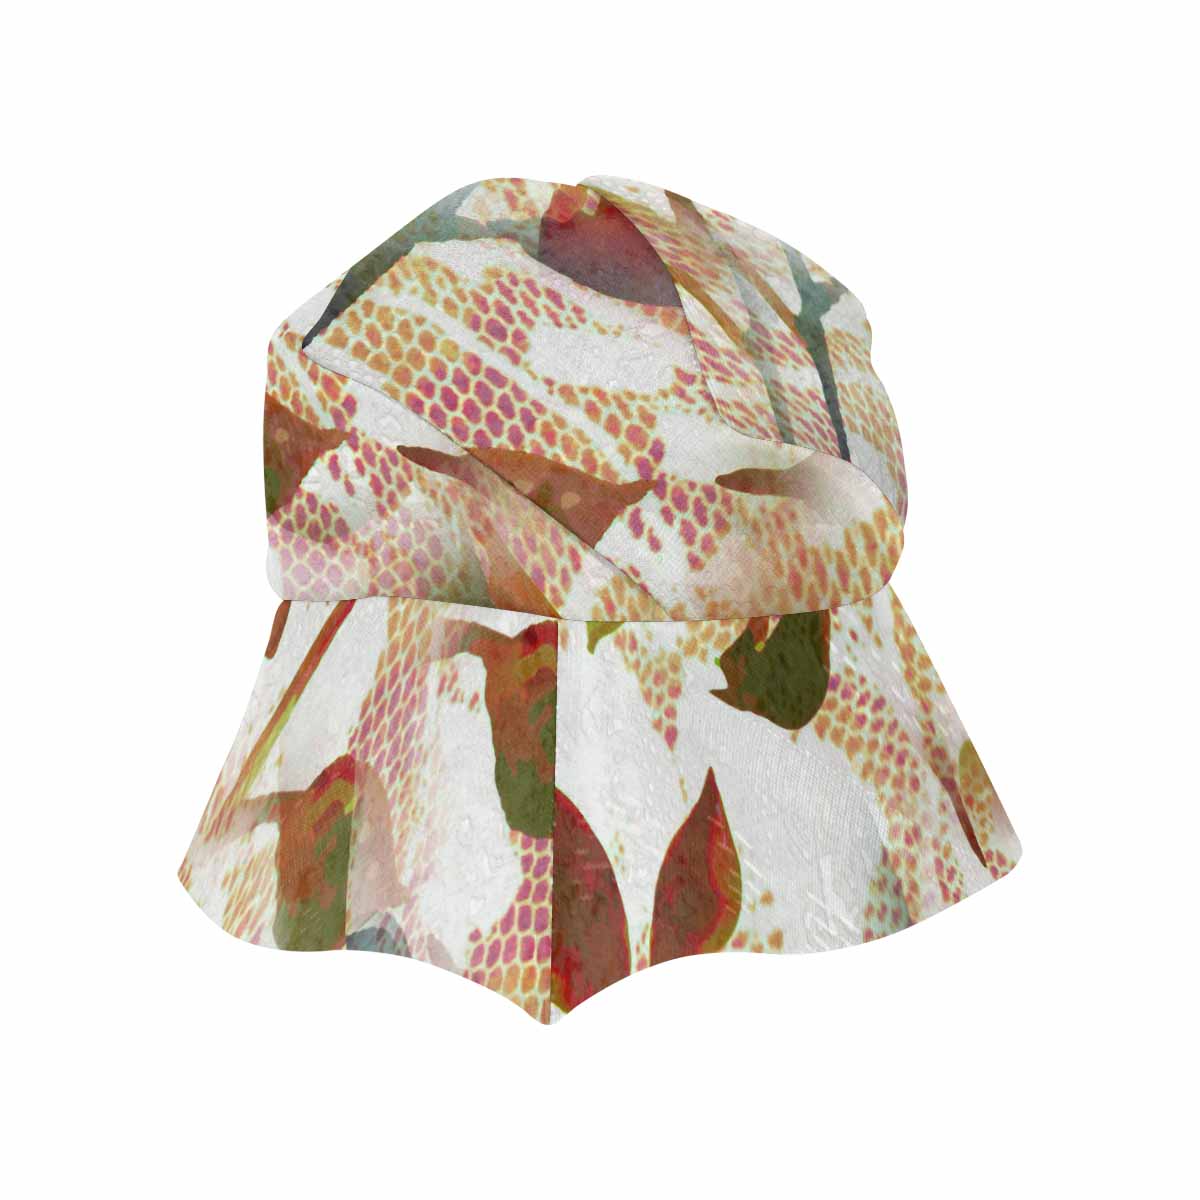 Victorian lace print, wide brim sunvisor Hat, outdoors hat, design 52